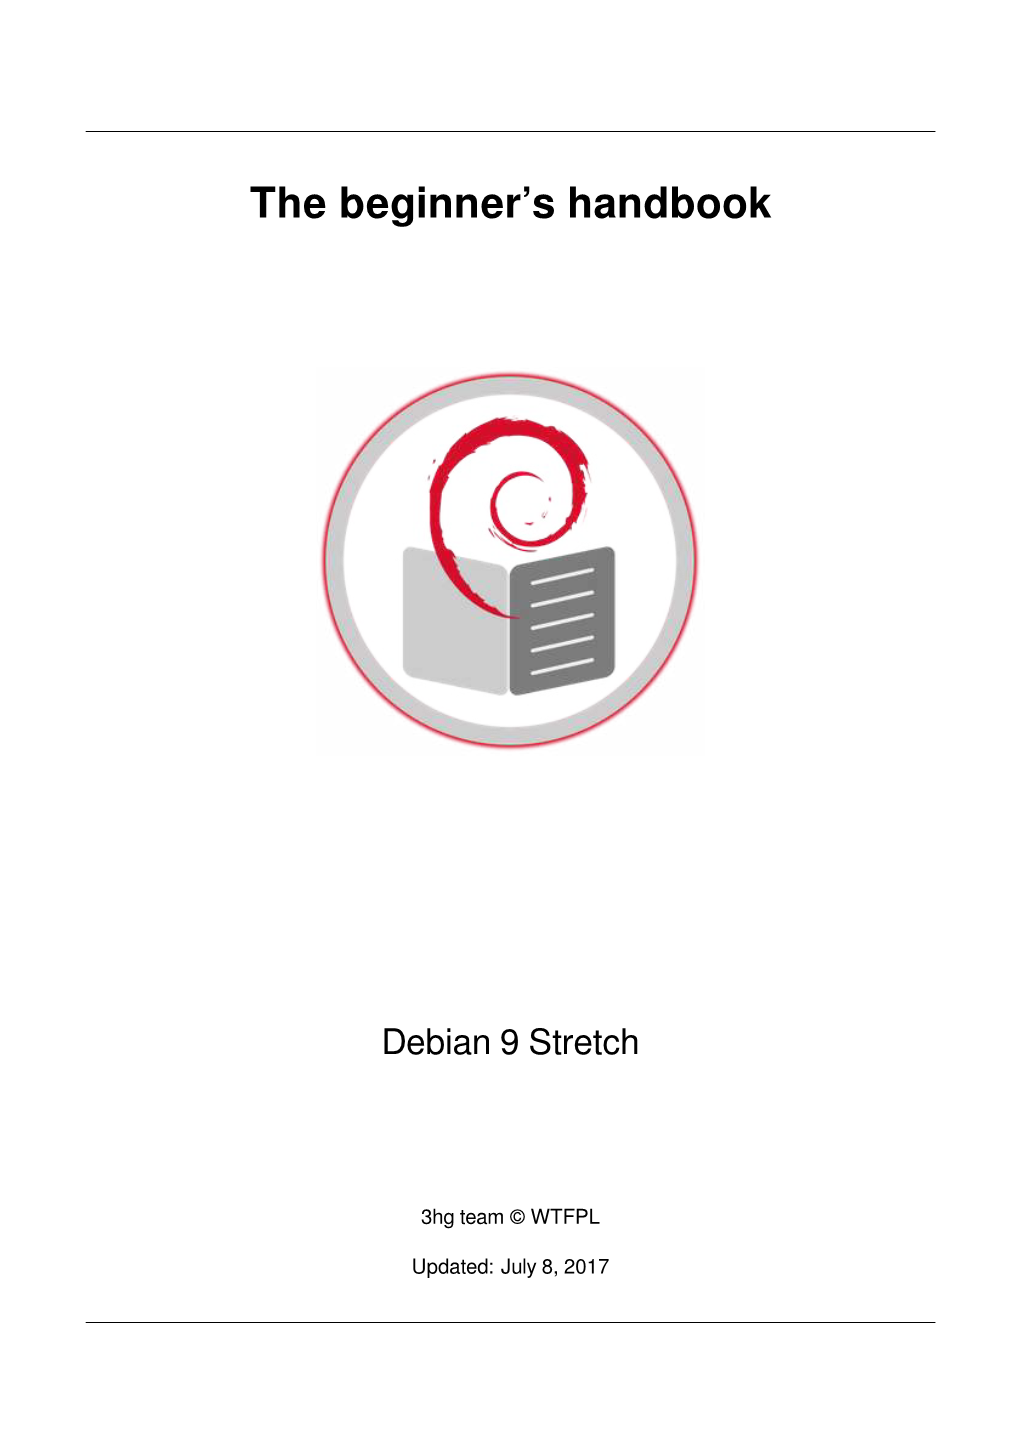 The Beginner's Handbook